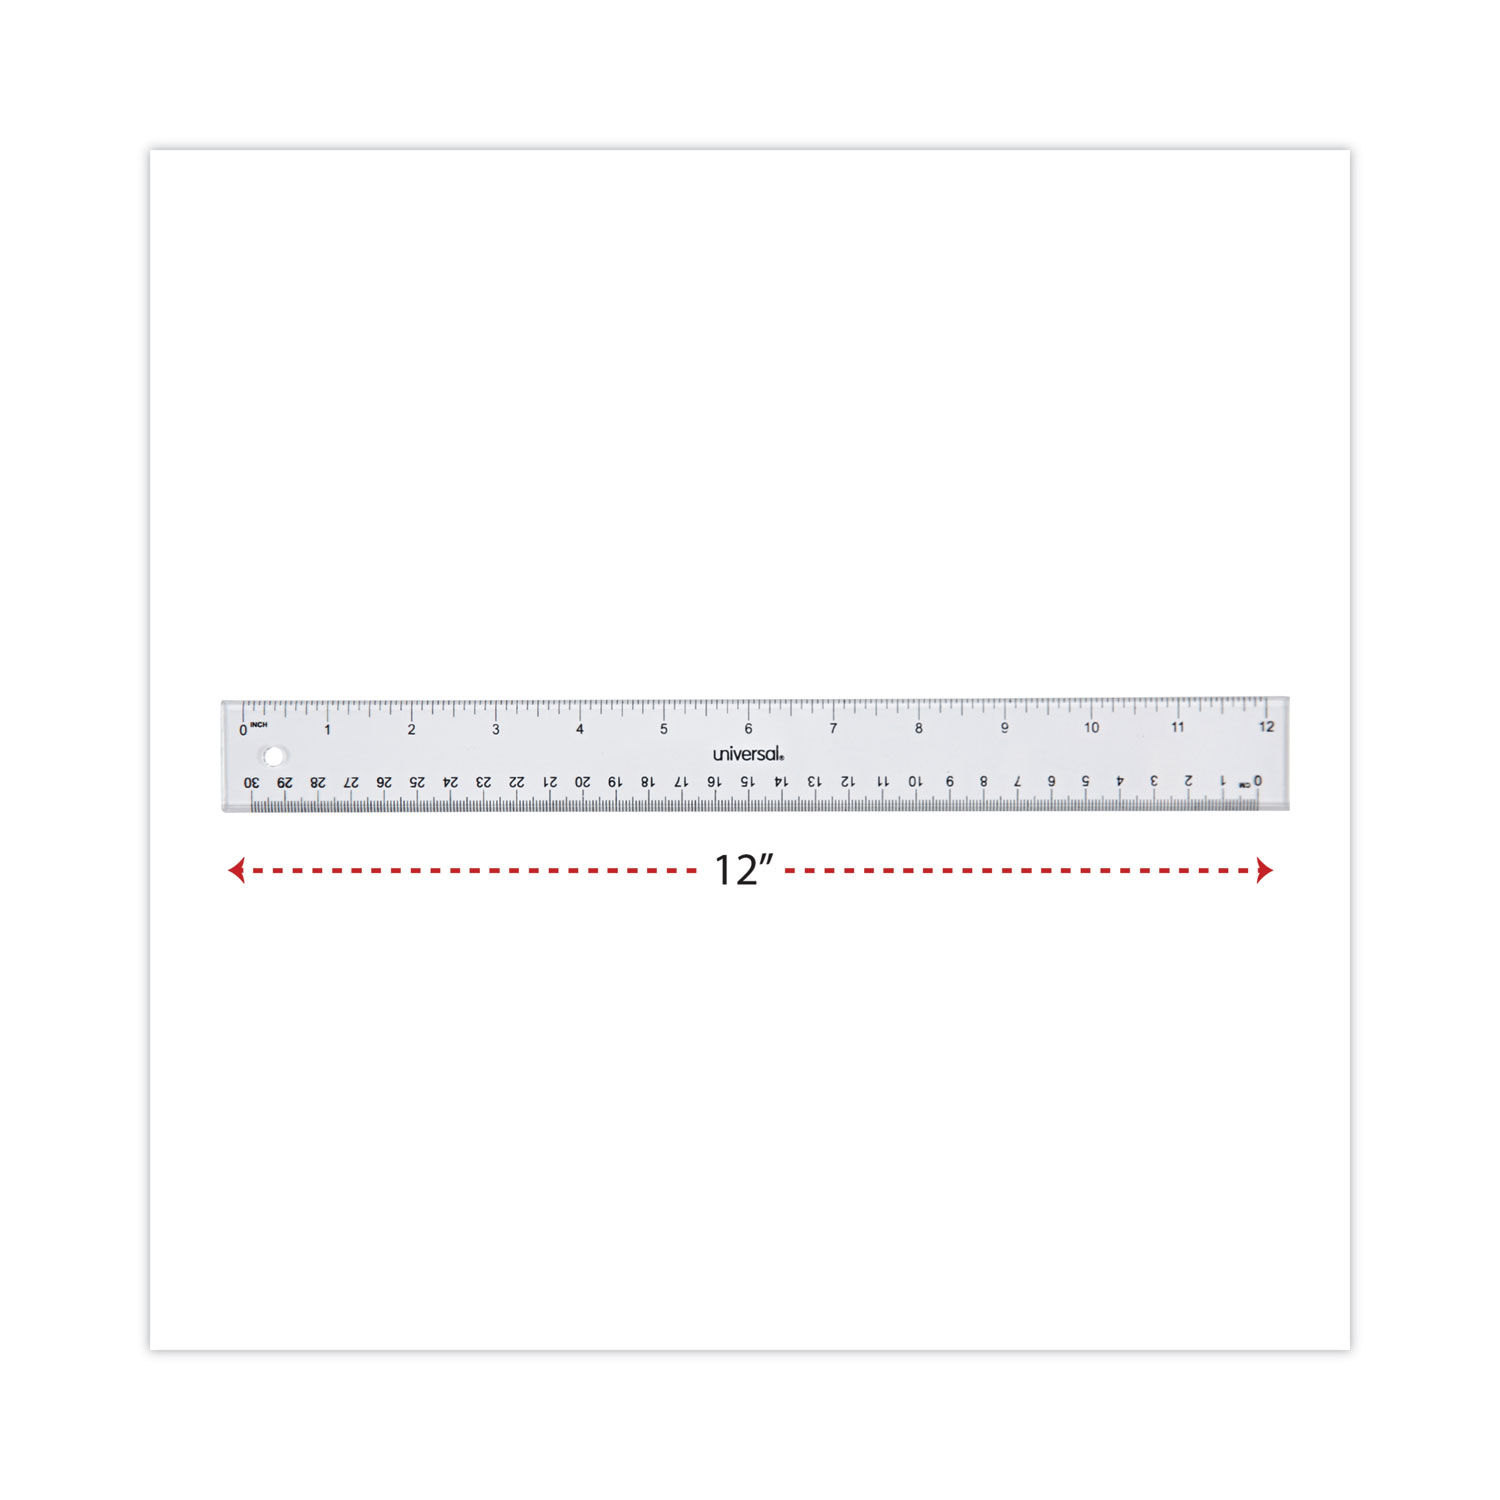 centimeter ruler actual size